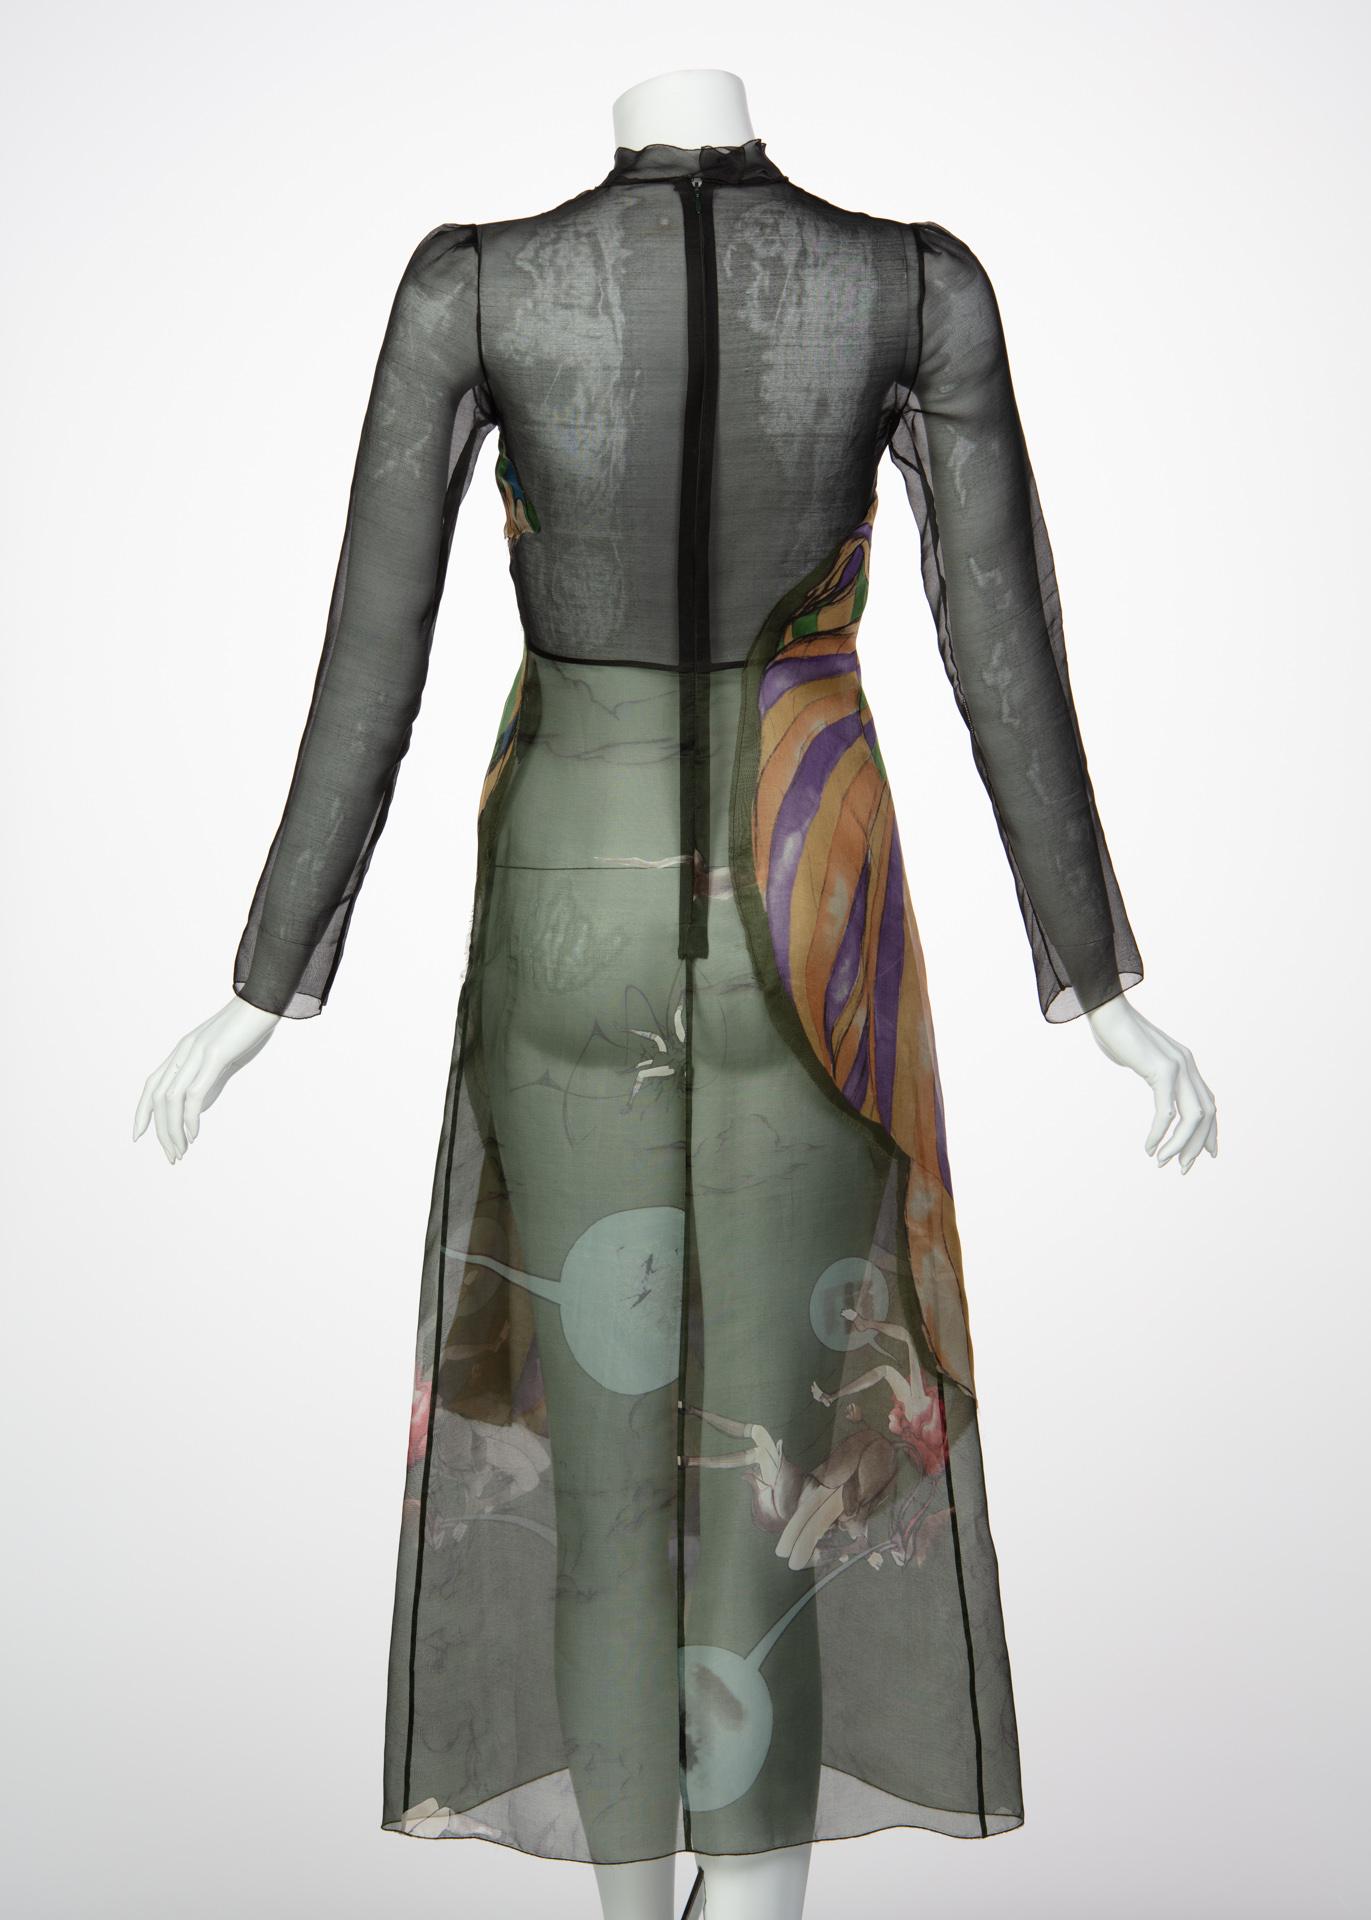 Women's Prada James Jean Fairy Runway Black Printed Silk Dress, 2008 